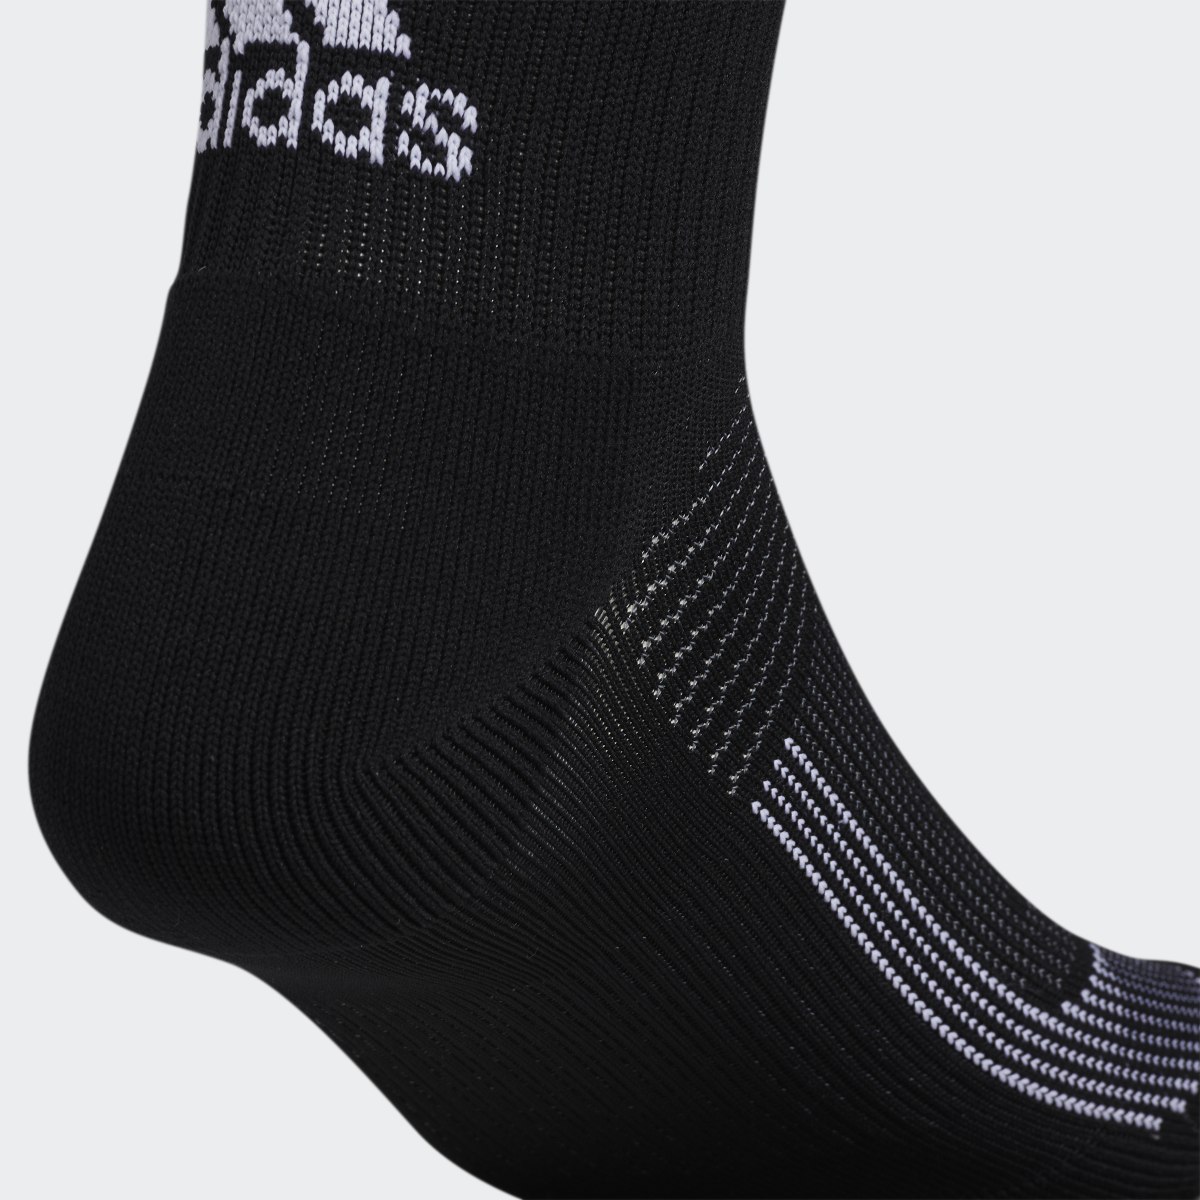 Adidas Superlite Ultraboost Quarter Socks 2 Pairs. 5